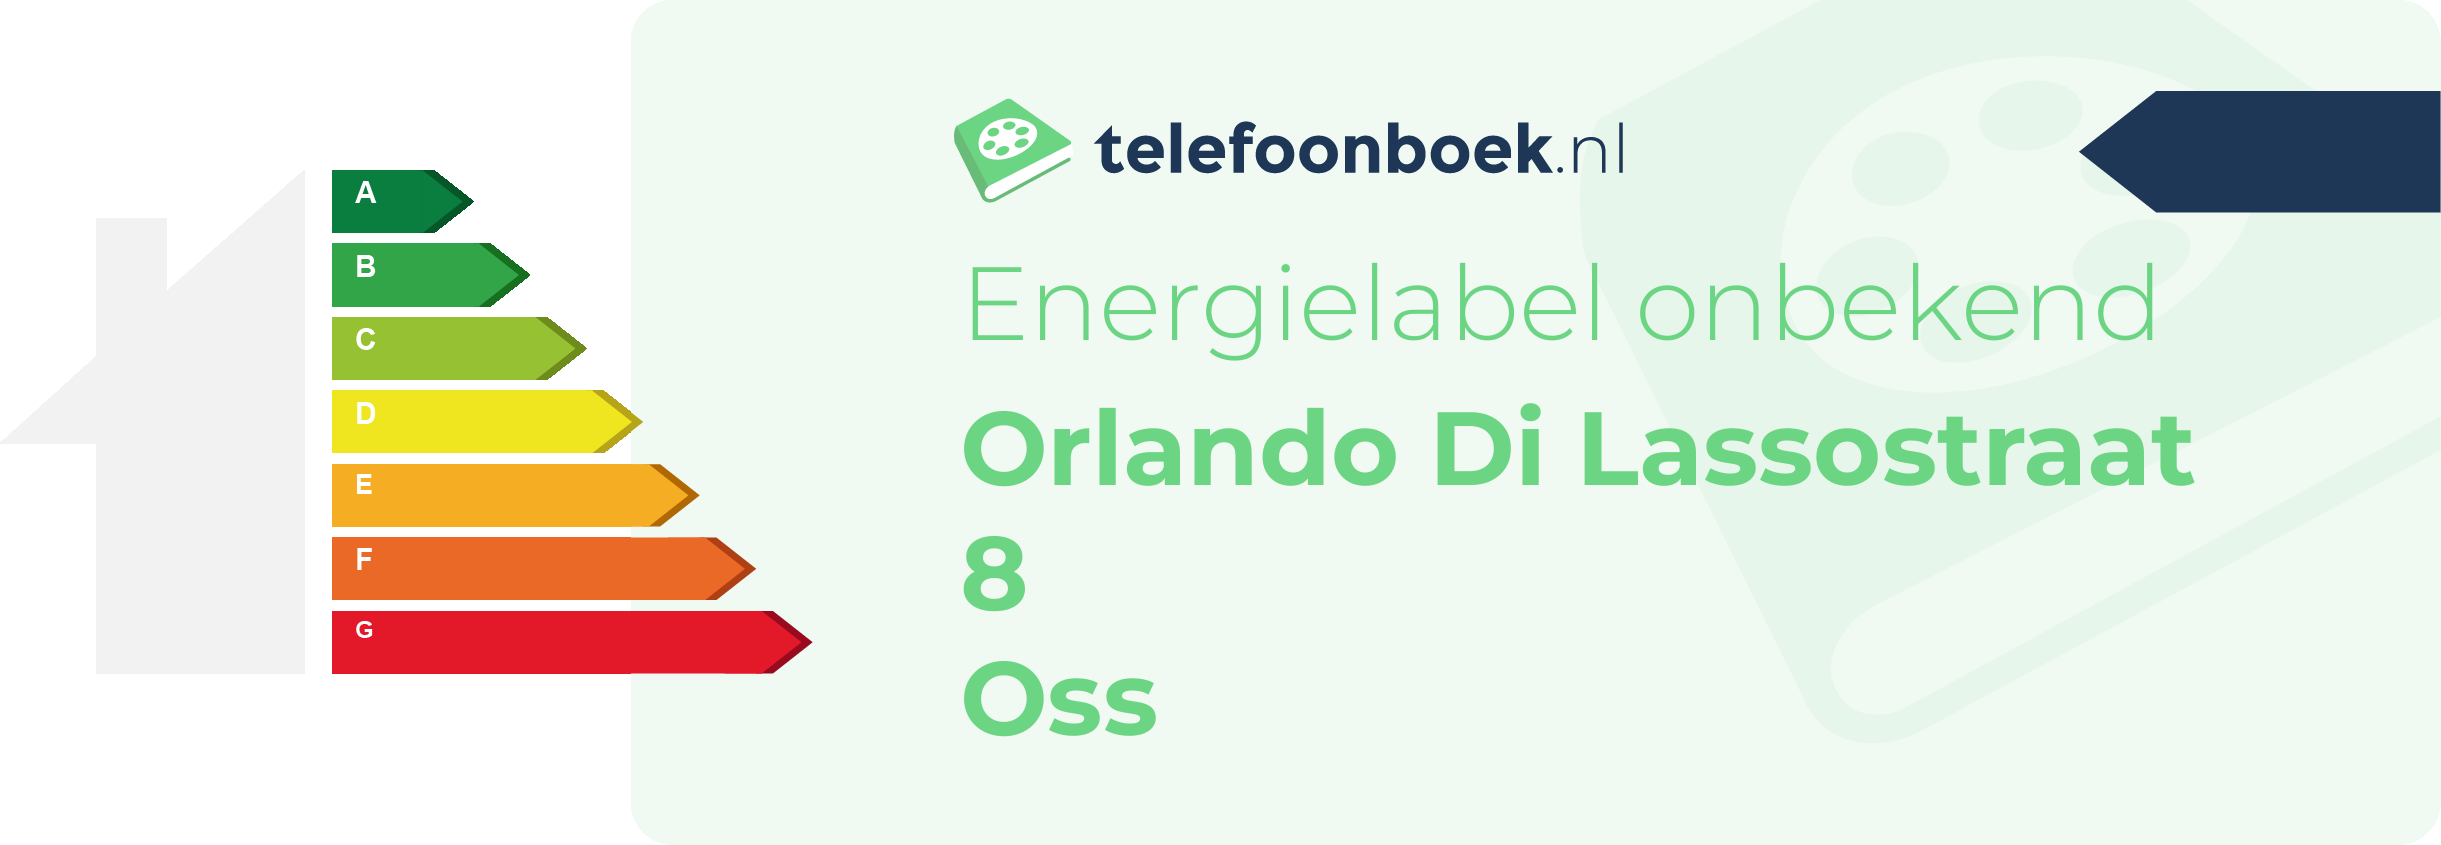 Energielabel Orlando Di Lassostraat 8 Oss